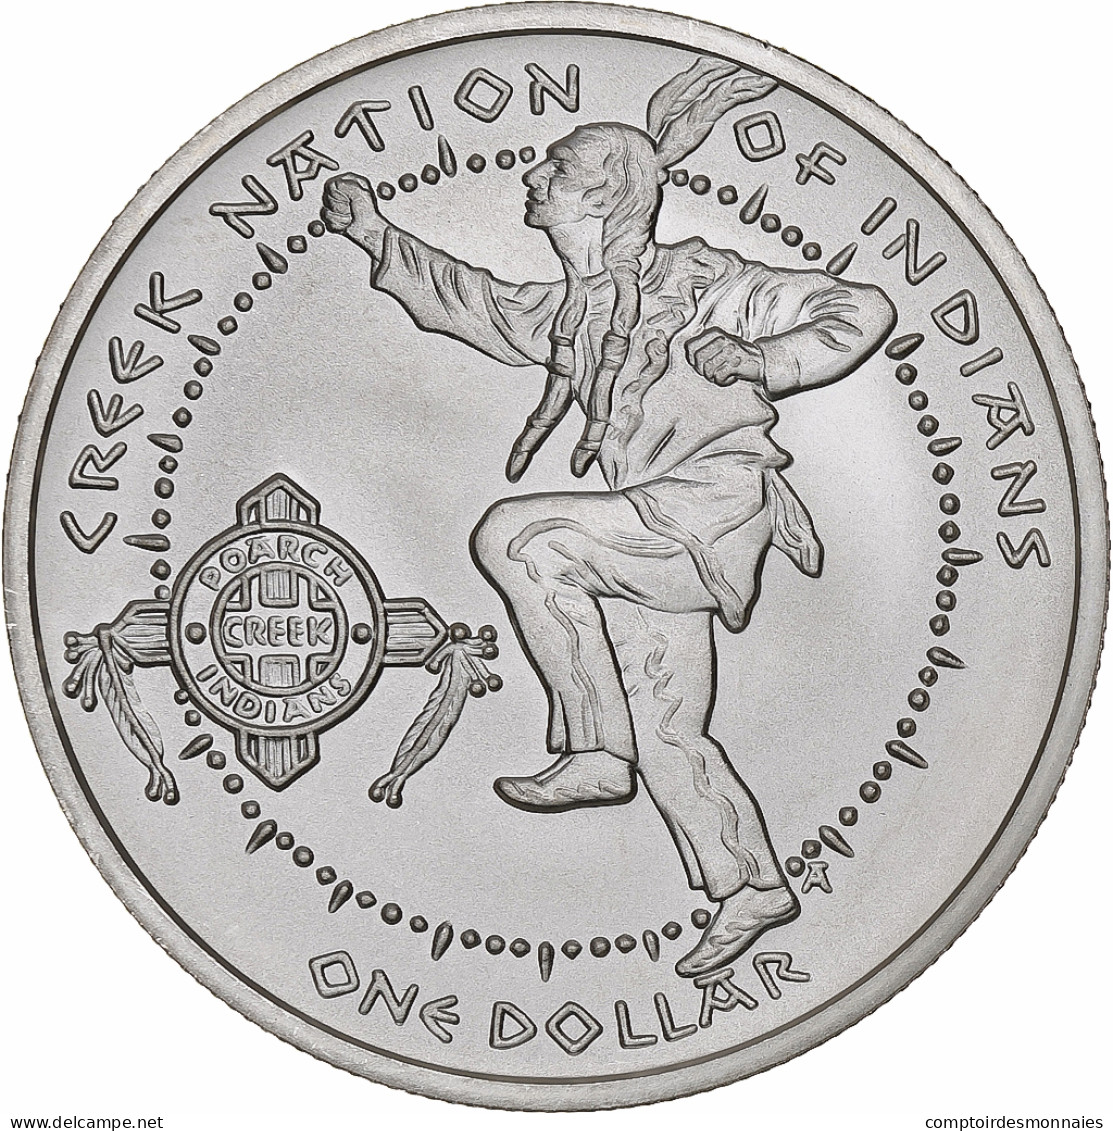 États-Unis, Dollar, Poarch Creek Indians, 2007, Flan Mat, Argent, FDC - Gedenkmünzen